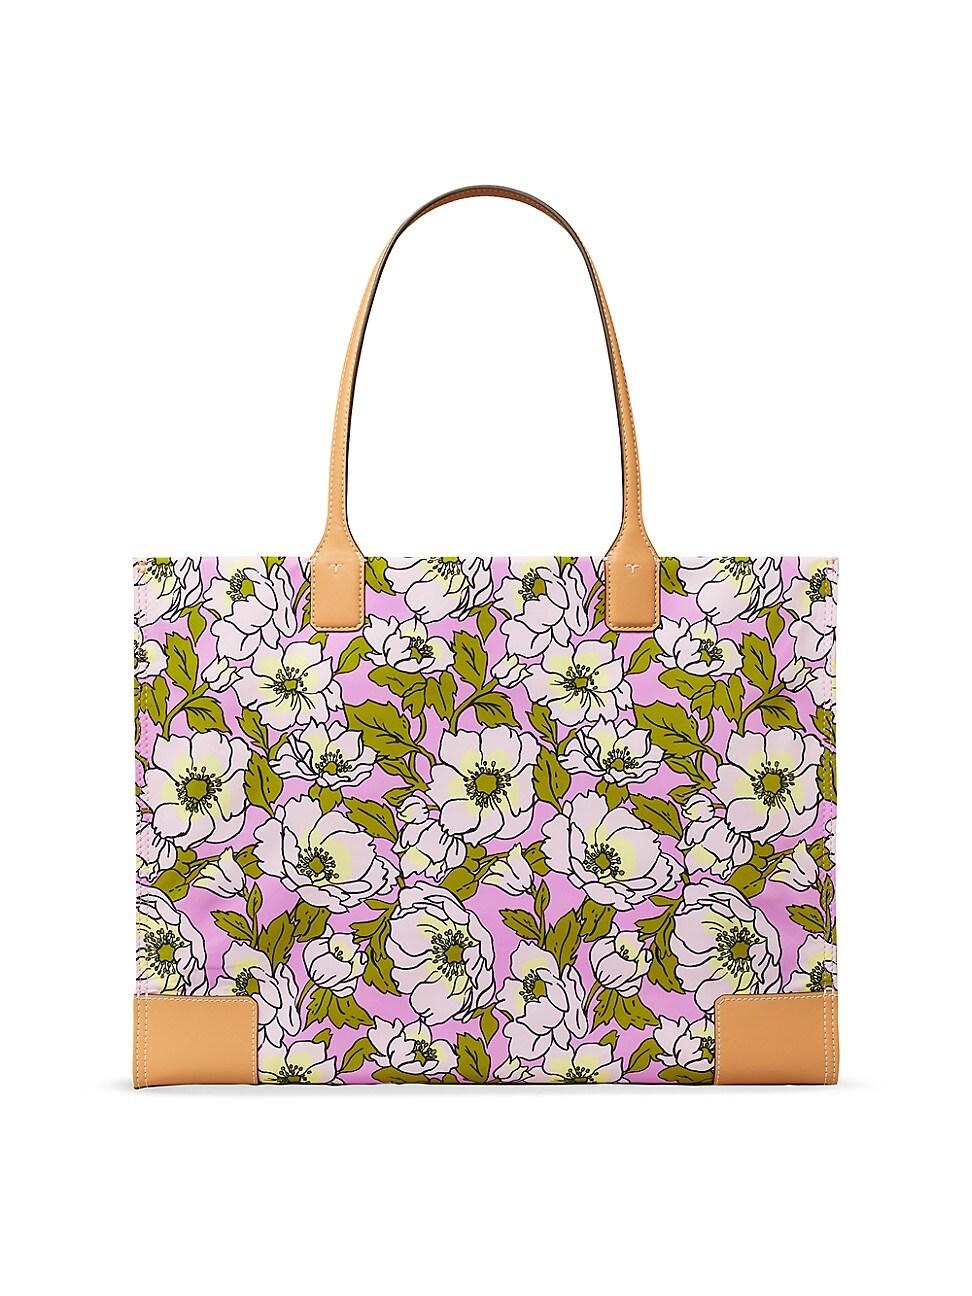 Neiman Marcus Tory Burch Ella Straw Basket Tote Bag w/ Floral